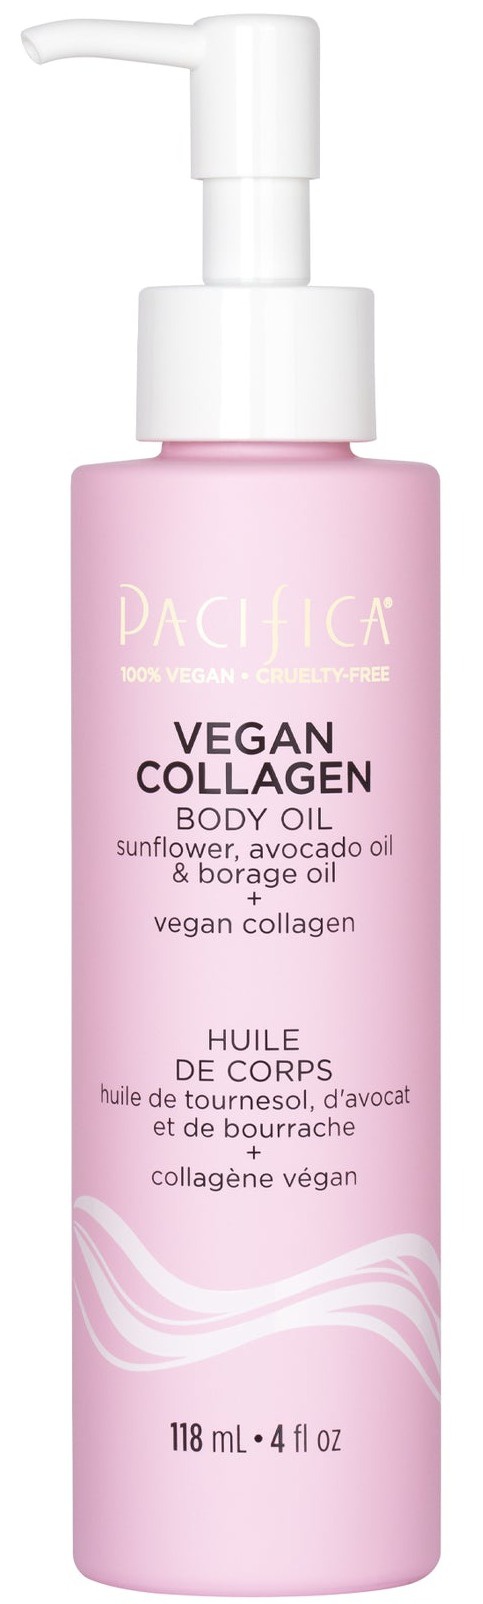 Pacifica Vegan Collagen Body Oil